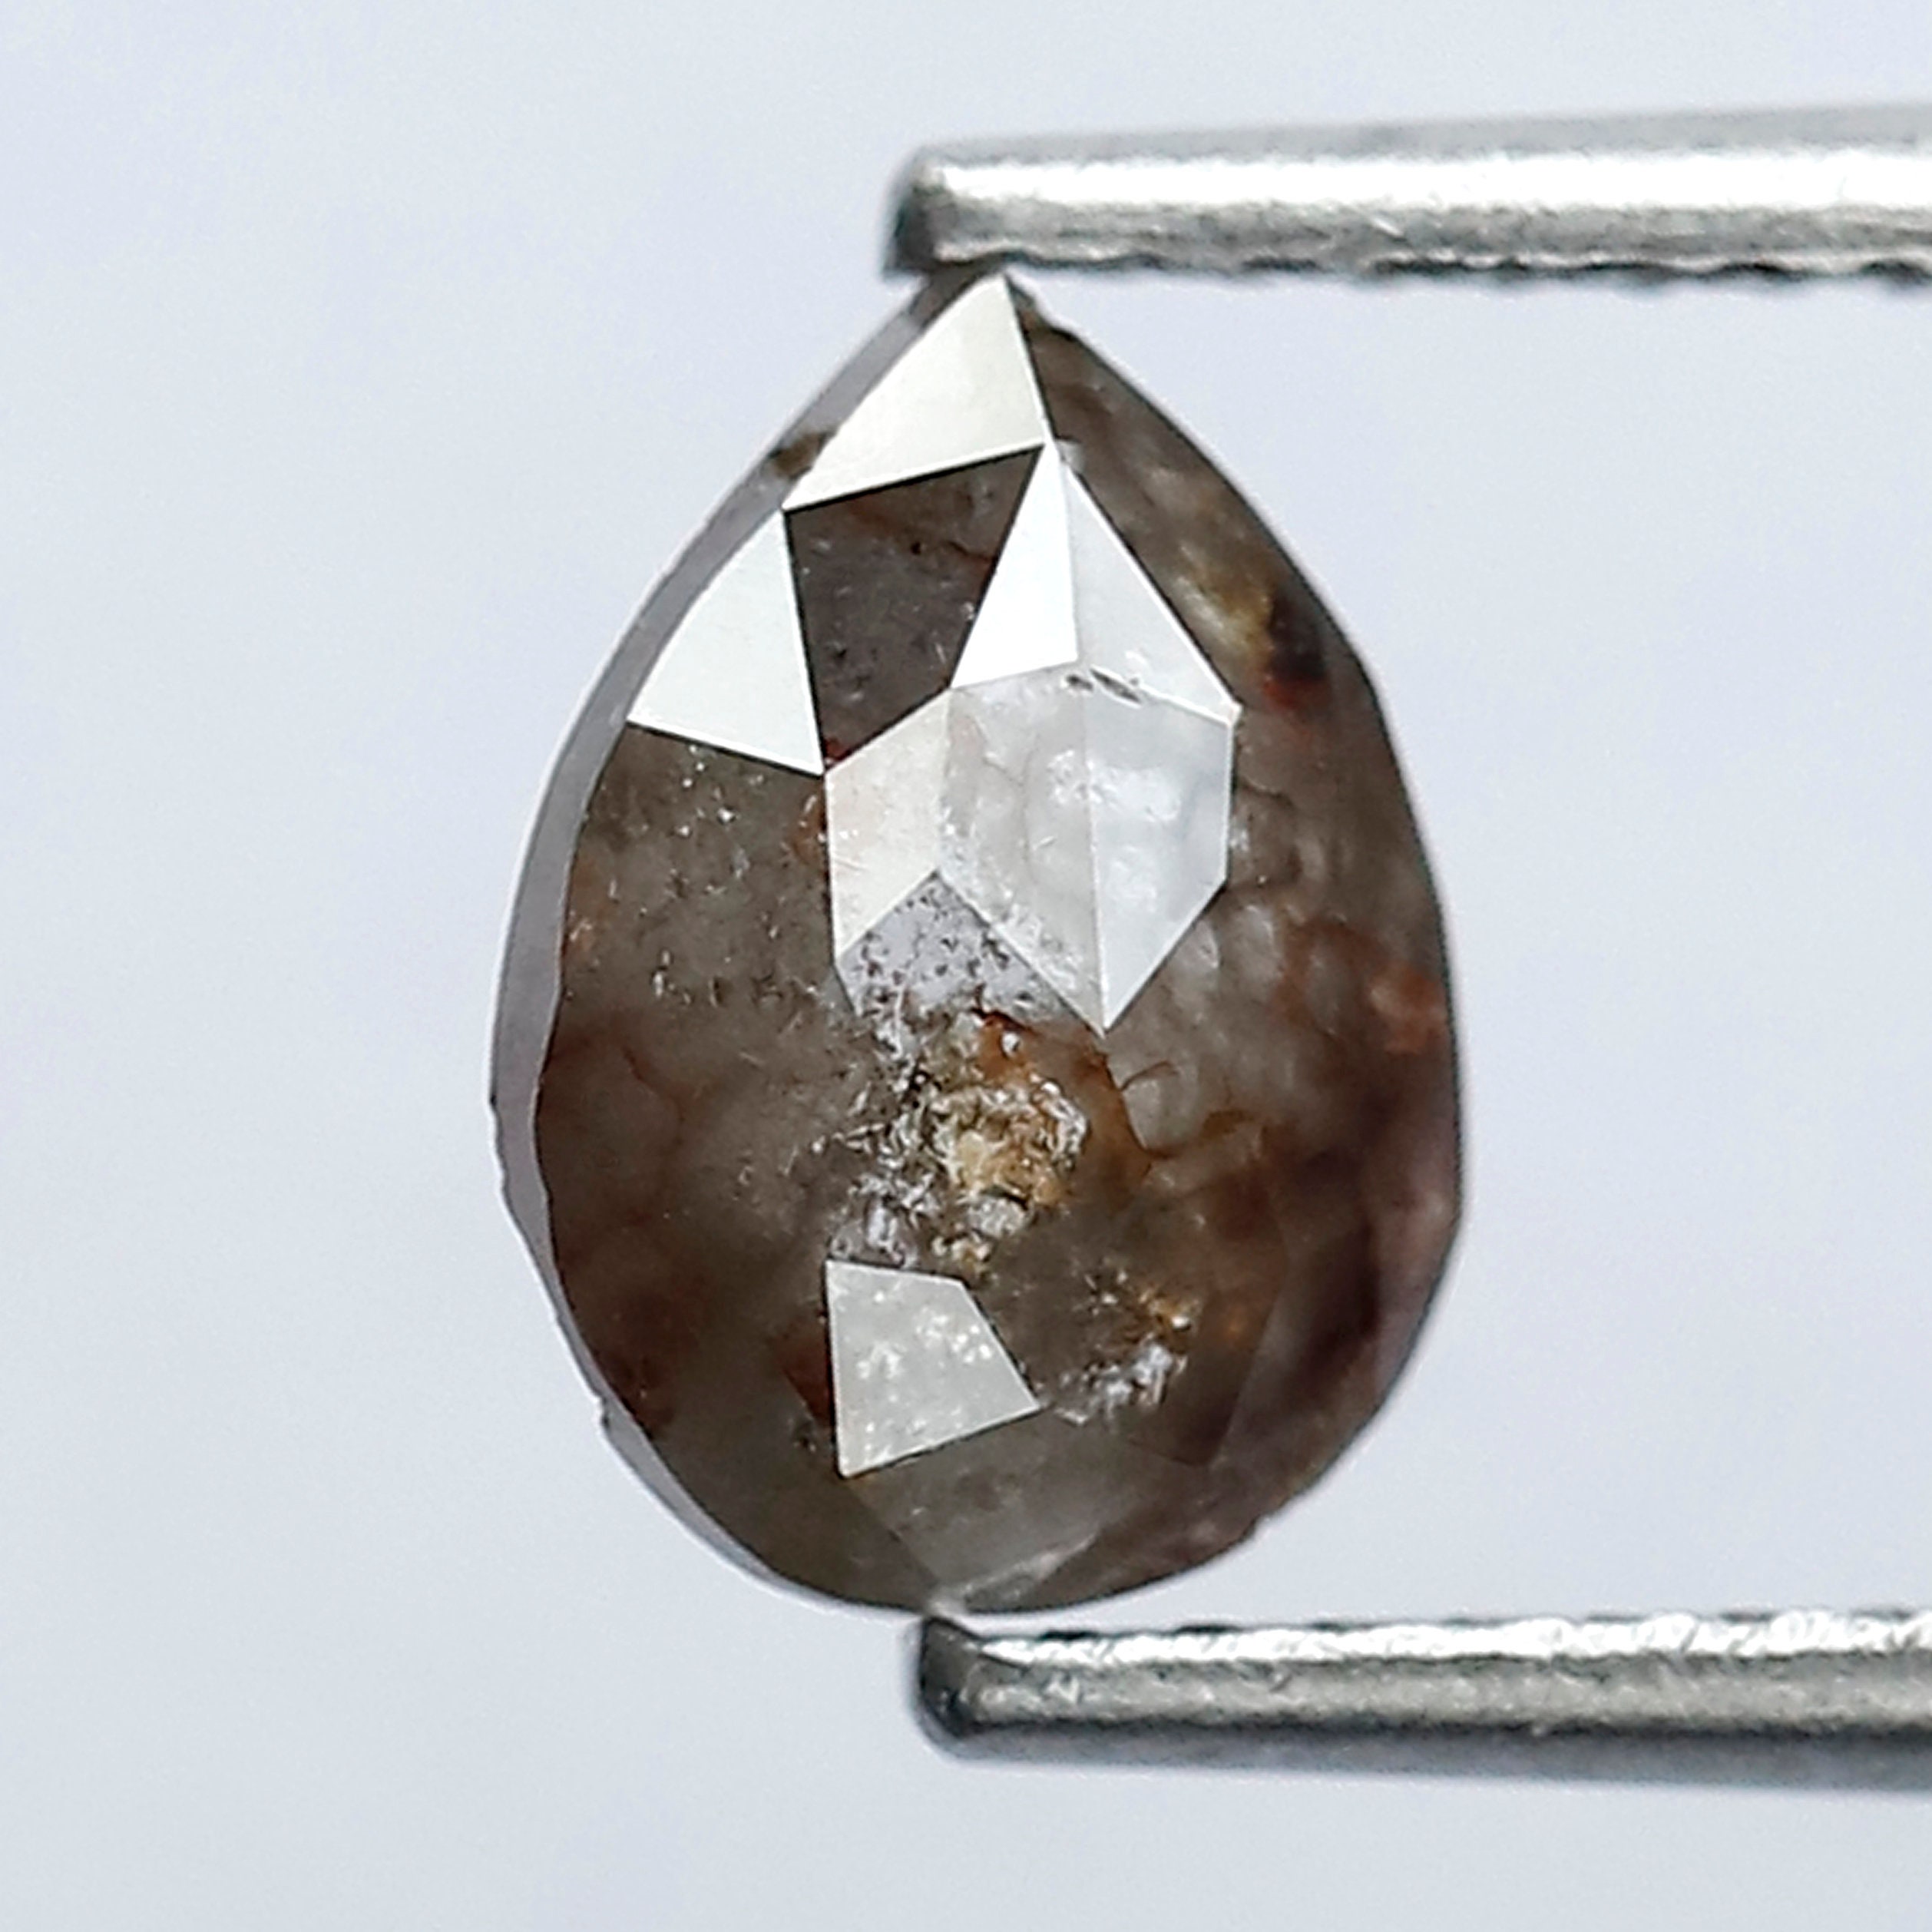 Rare large 2.7 carat red oval genuine uncut diamond, rough diamond